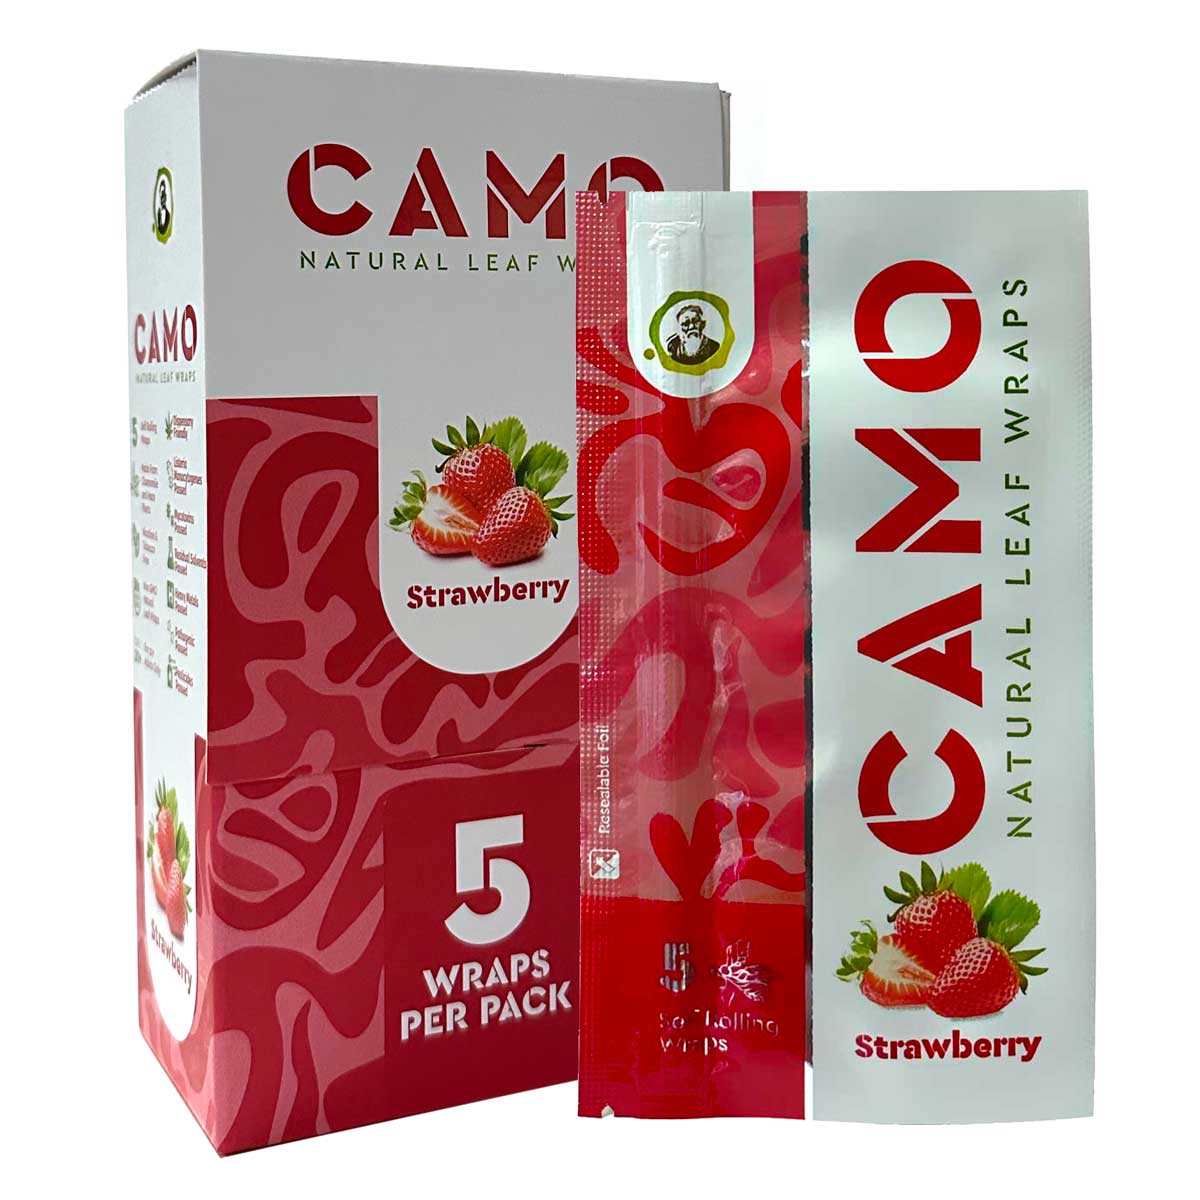 Camo Hemp Wraps - (25 x 5 Wraps) - MK Distro